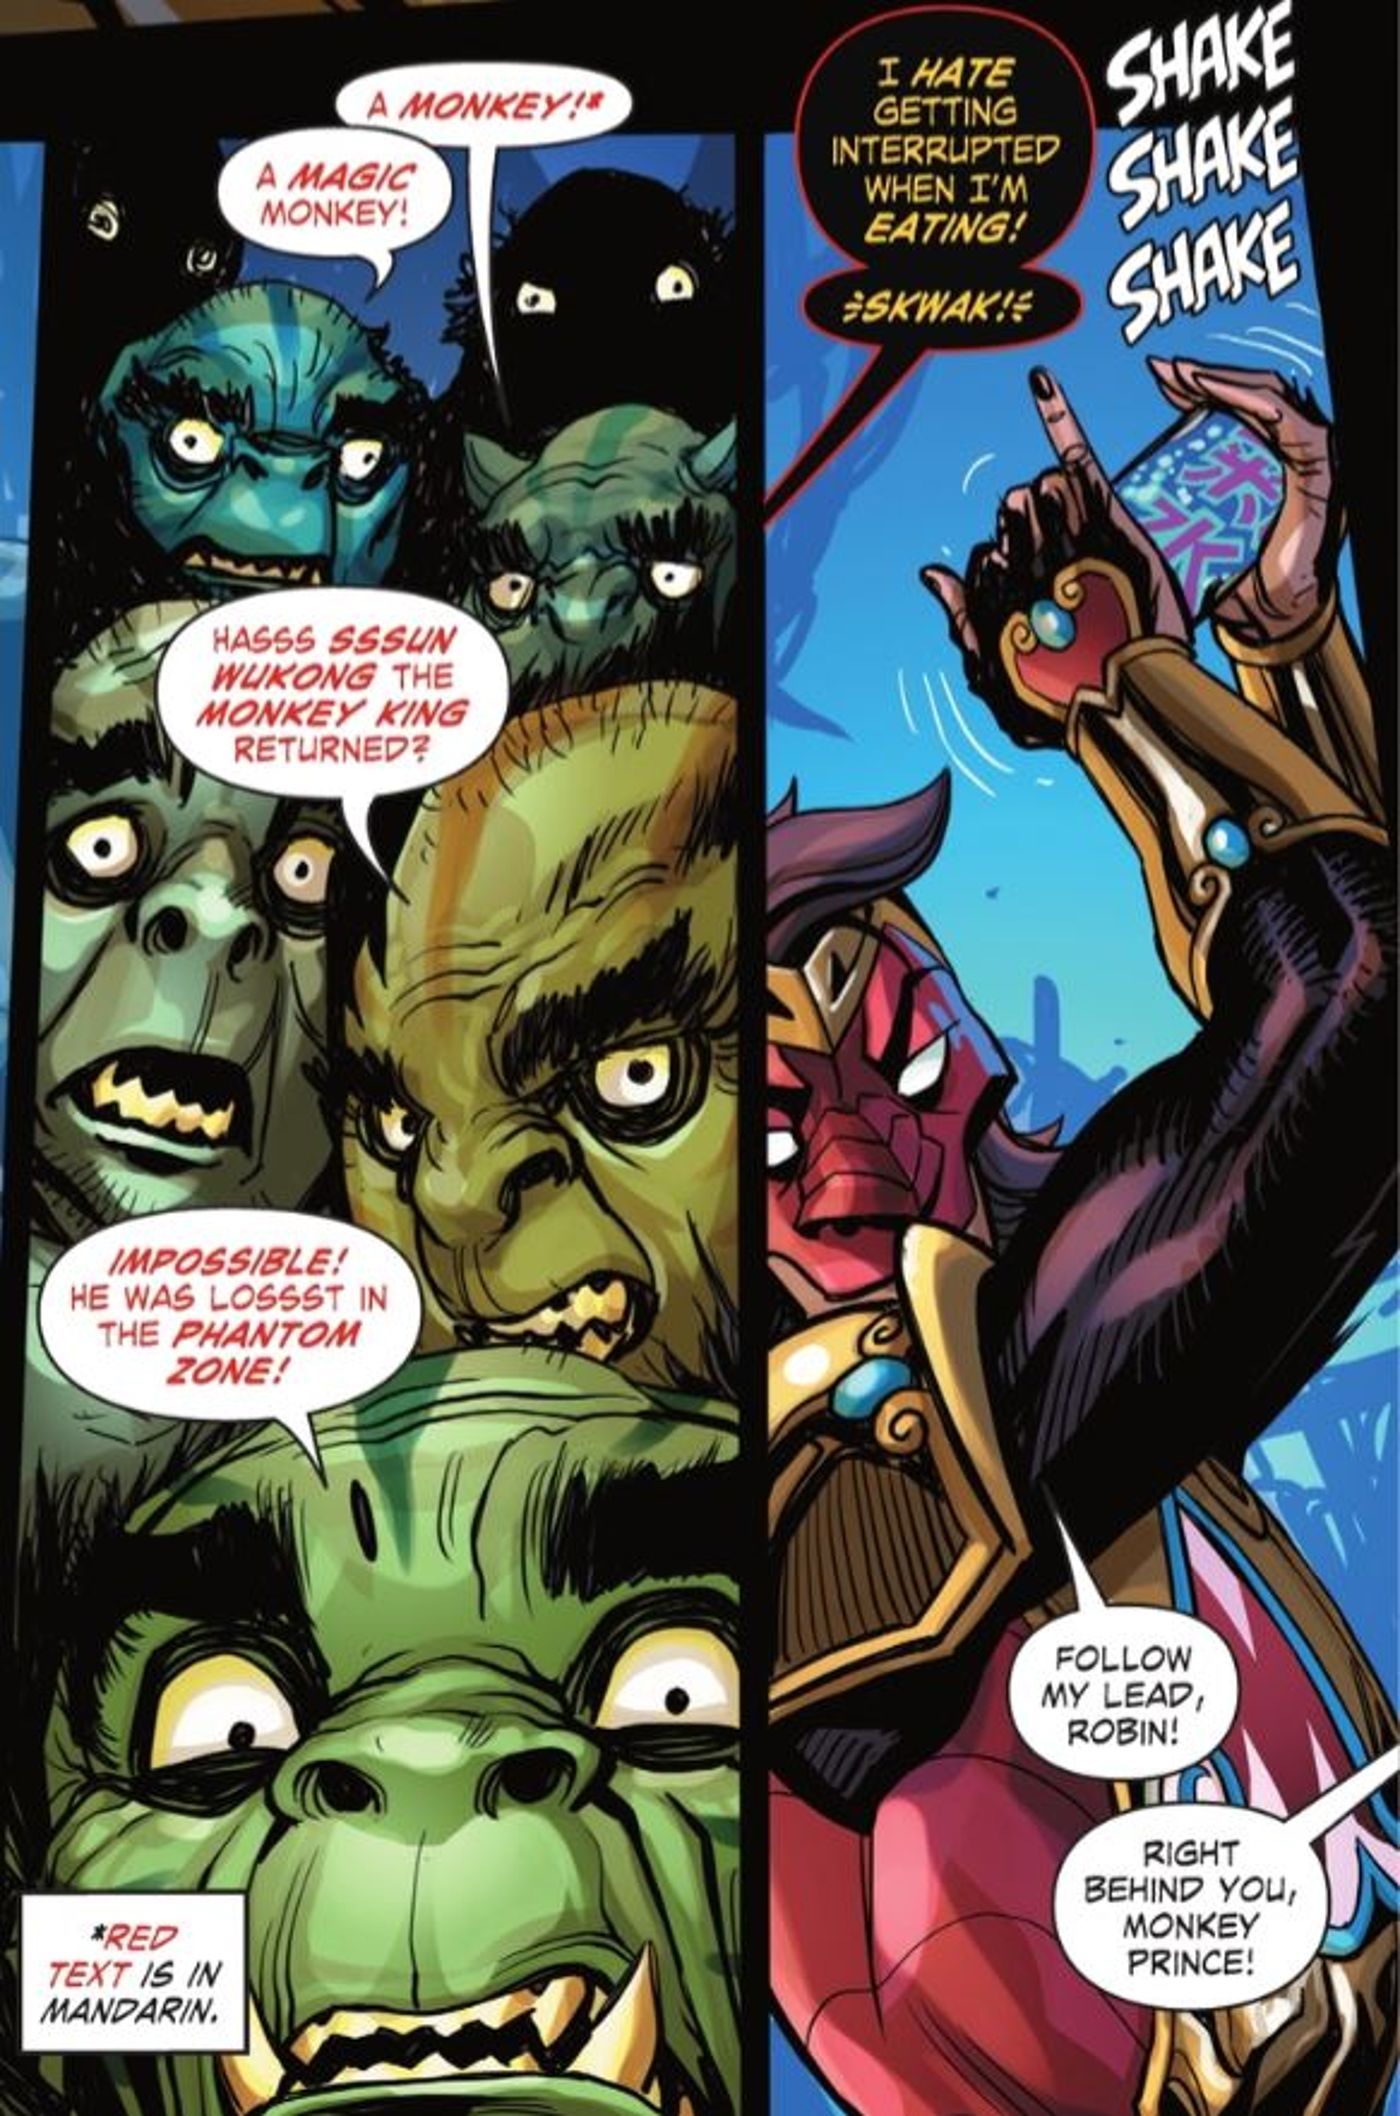 Monkey Prince and the Phantom Zone DC Comics